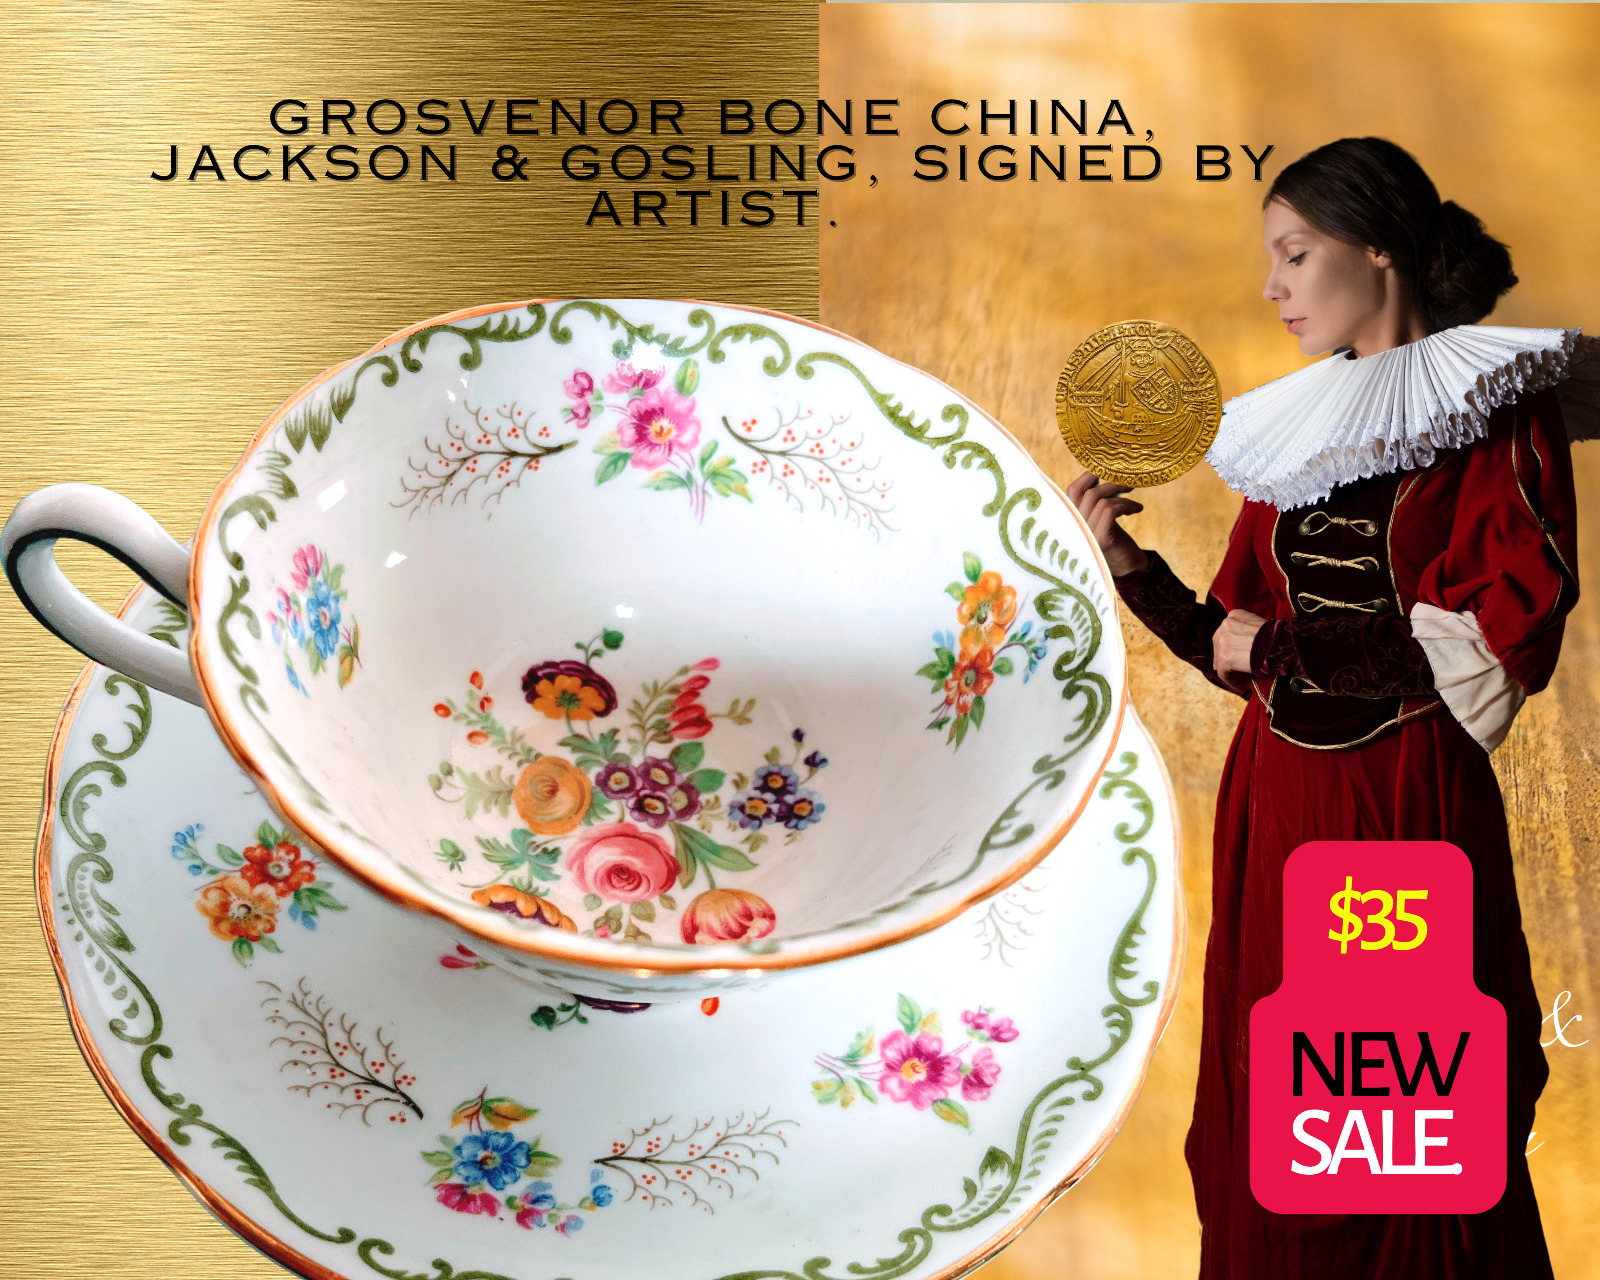 Grosvenor Bone China, Jackson & Gosling, Signed by Artist.